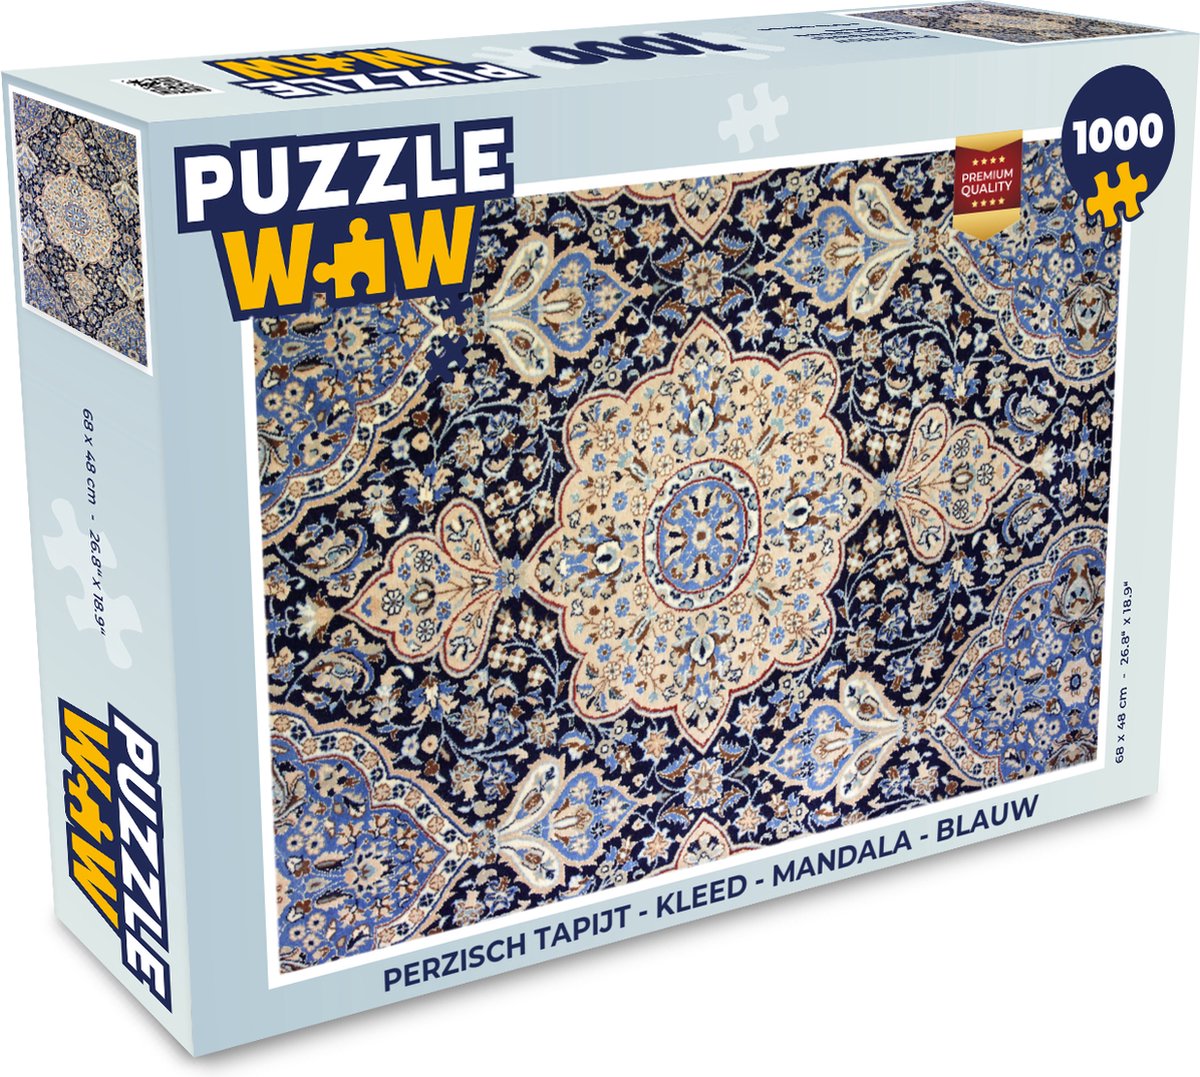 Afbeelding van product PuzzleWow  Puzzel Perzisch Tapijt - Kleed - Mandala - Blauw - Legpuzzel - Puzzel 1000 stukjes volwassenen